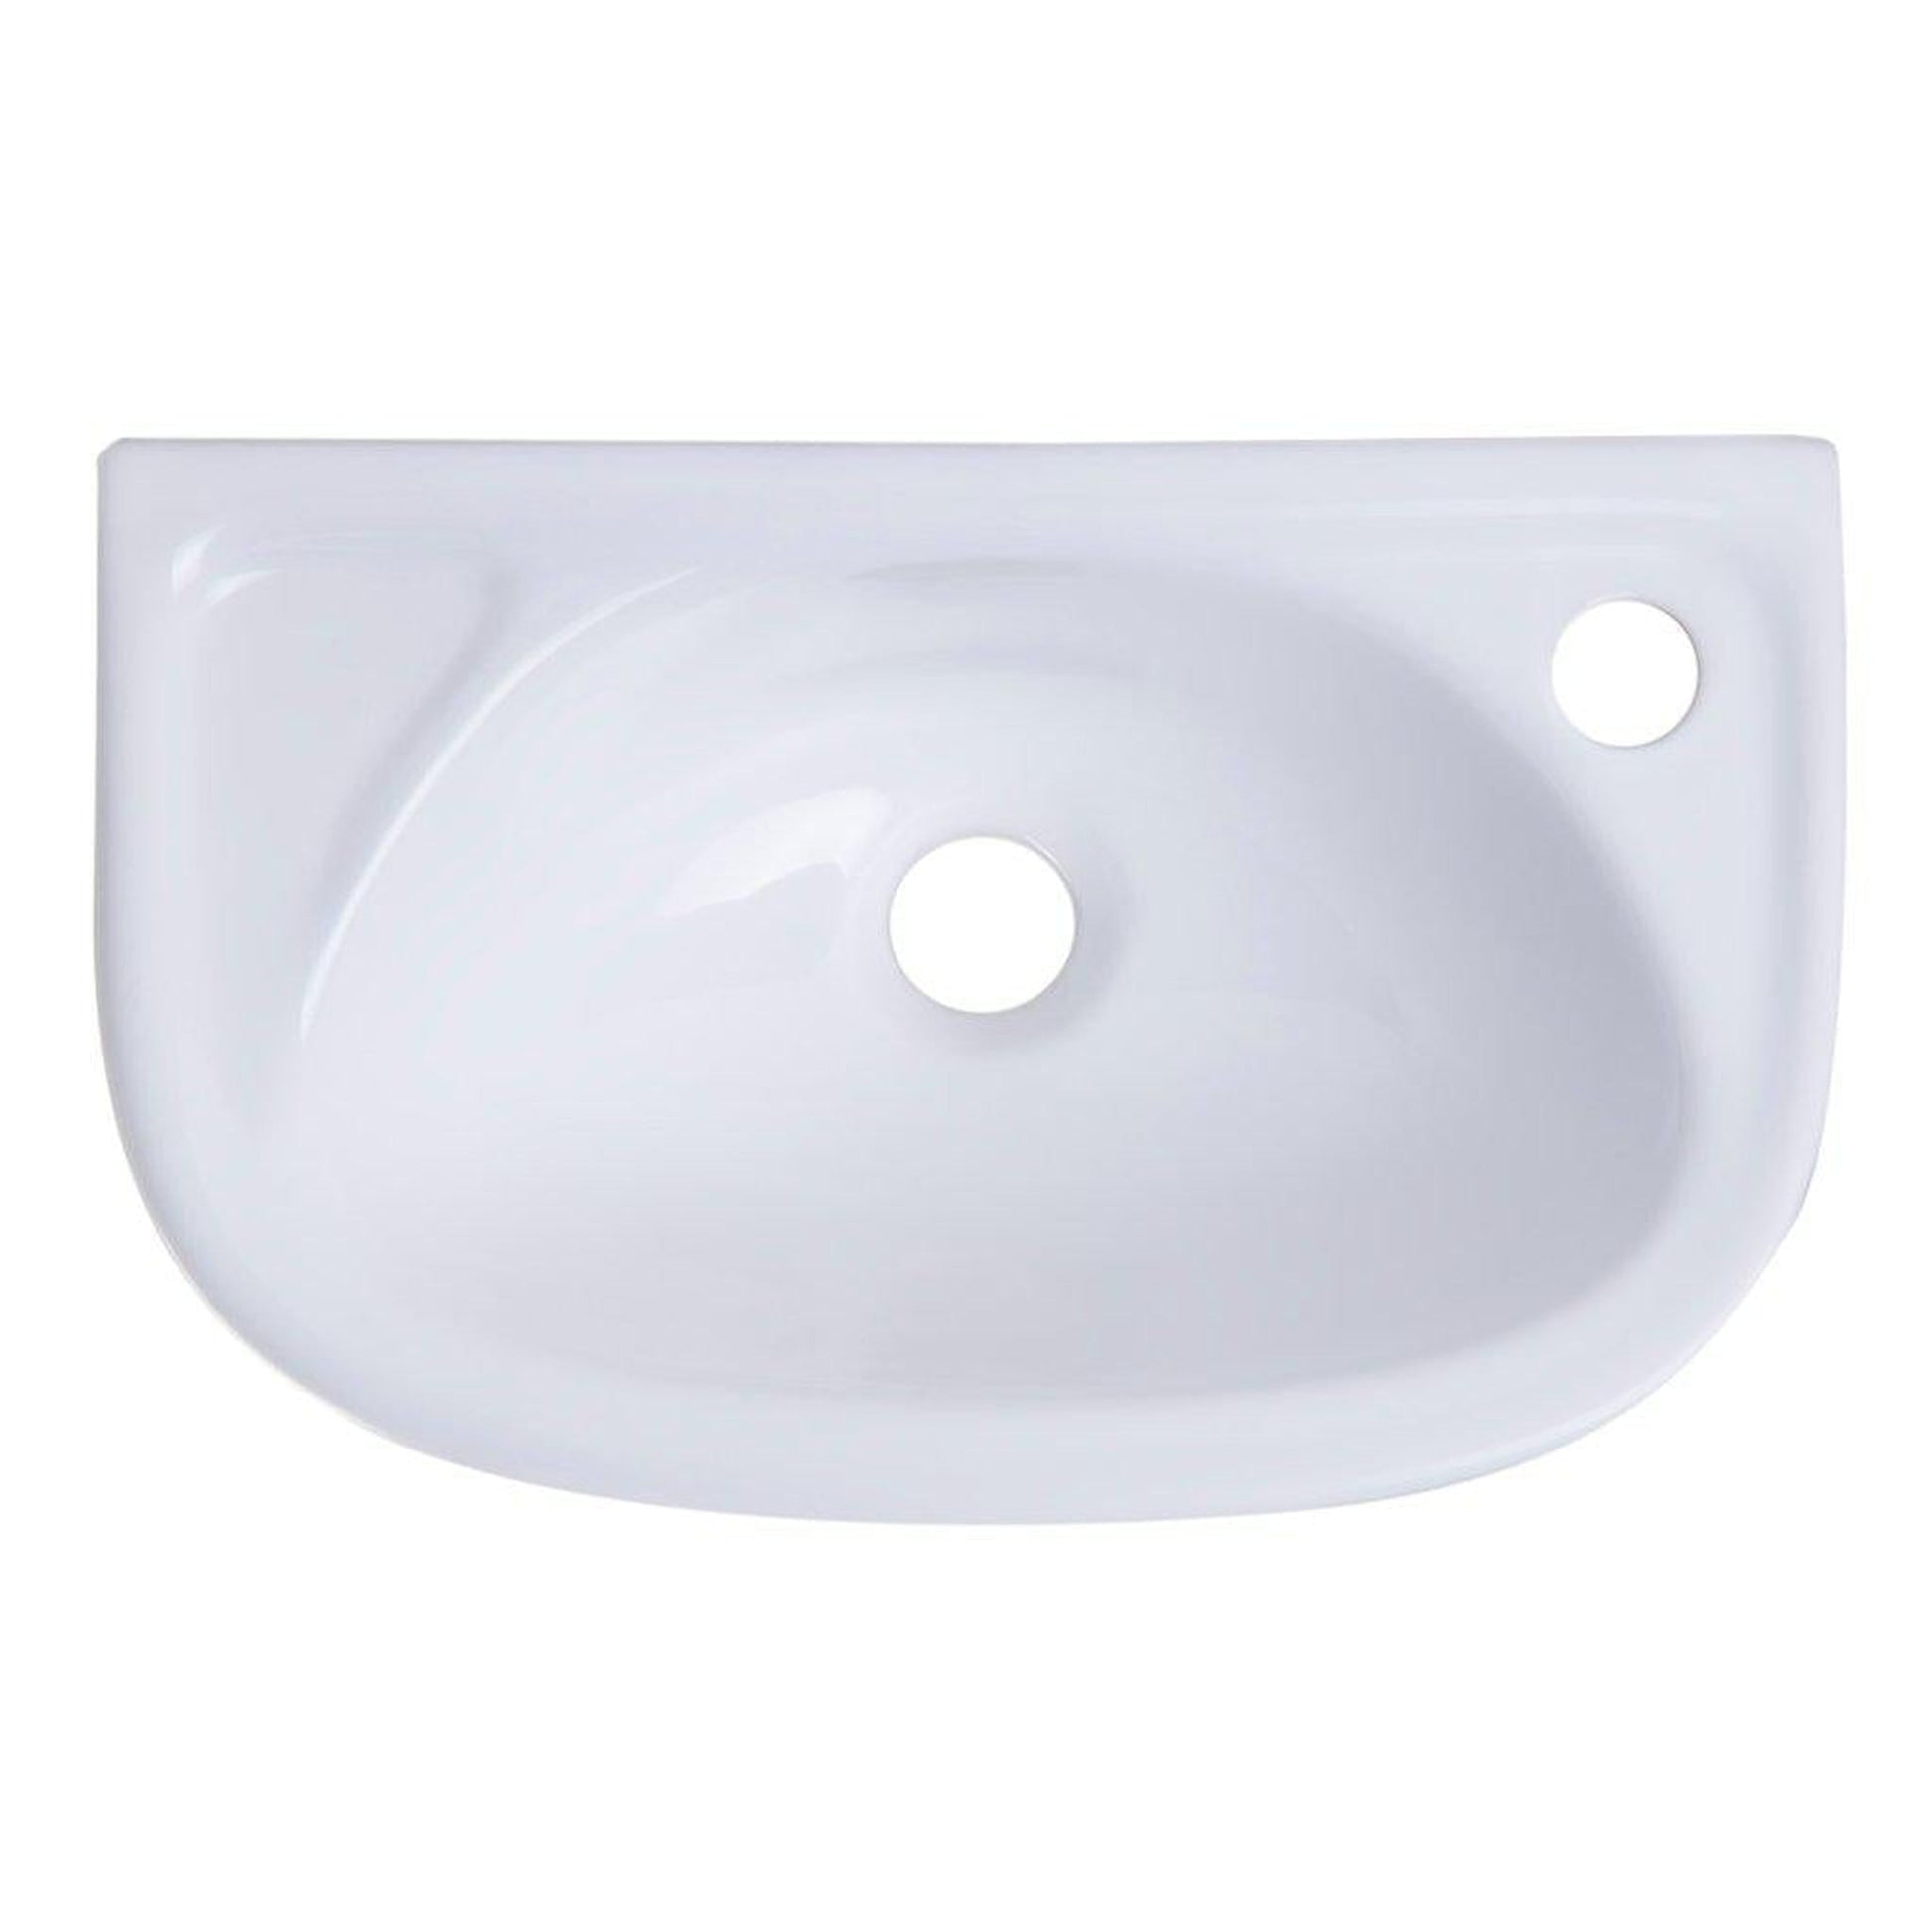 ALFI Brand AB102 16" White Wall-Mounted U-Shaped Ceramic Bathroom Sink With Single Faucet Hole